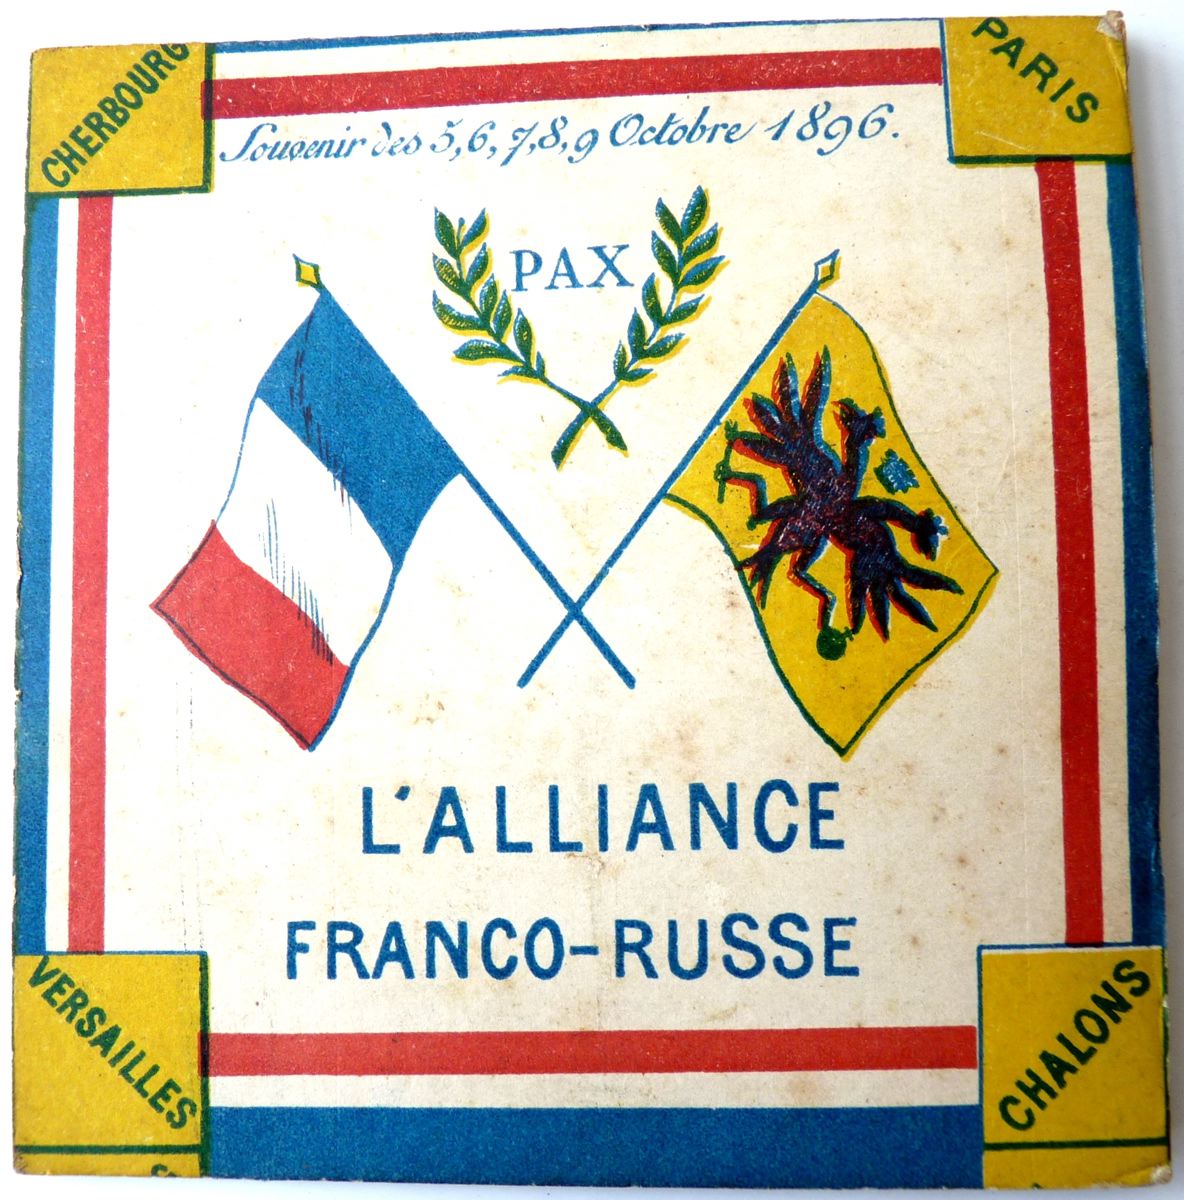 L'alliance Franco-russe